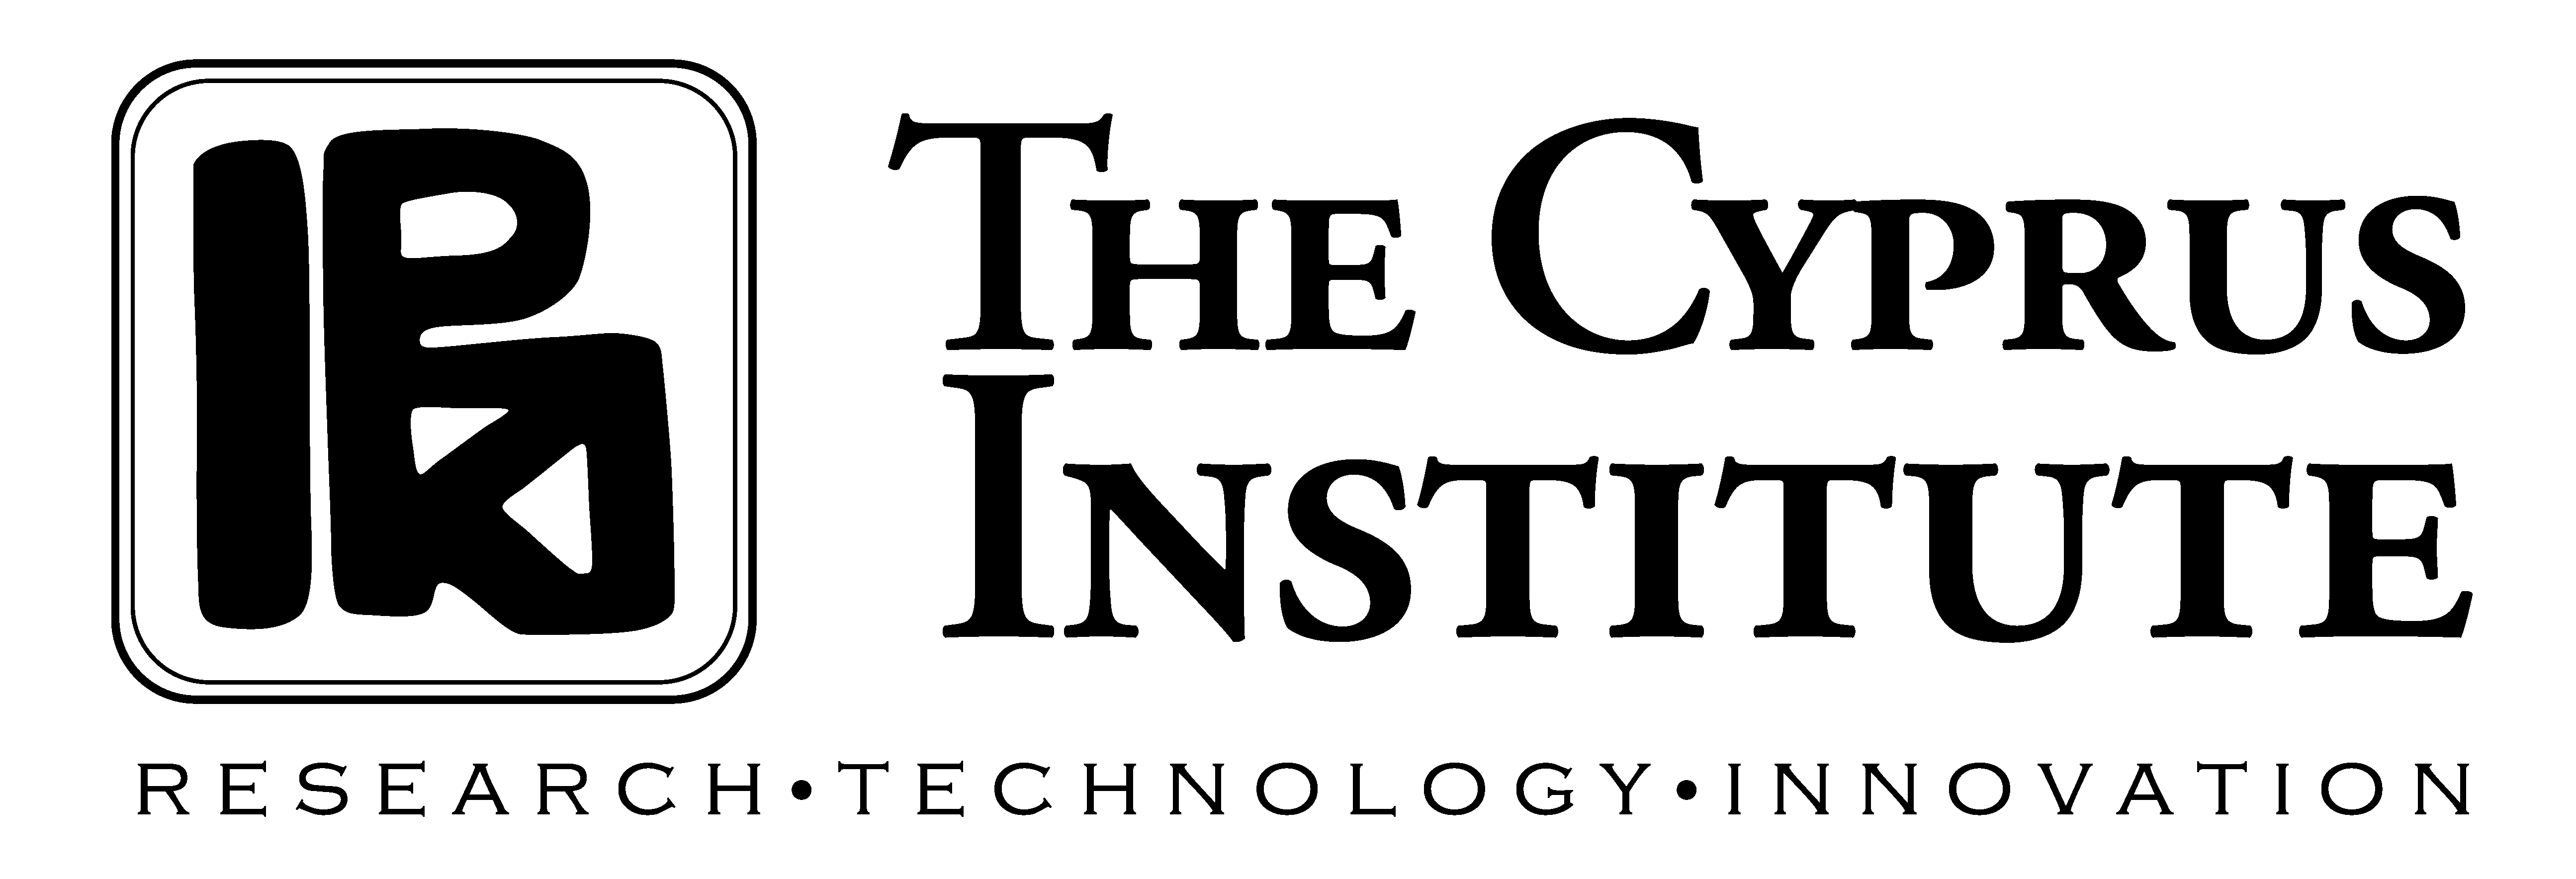 STARC logo